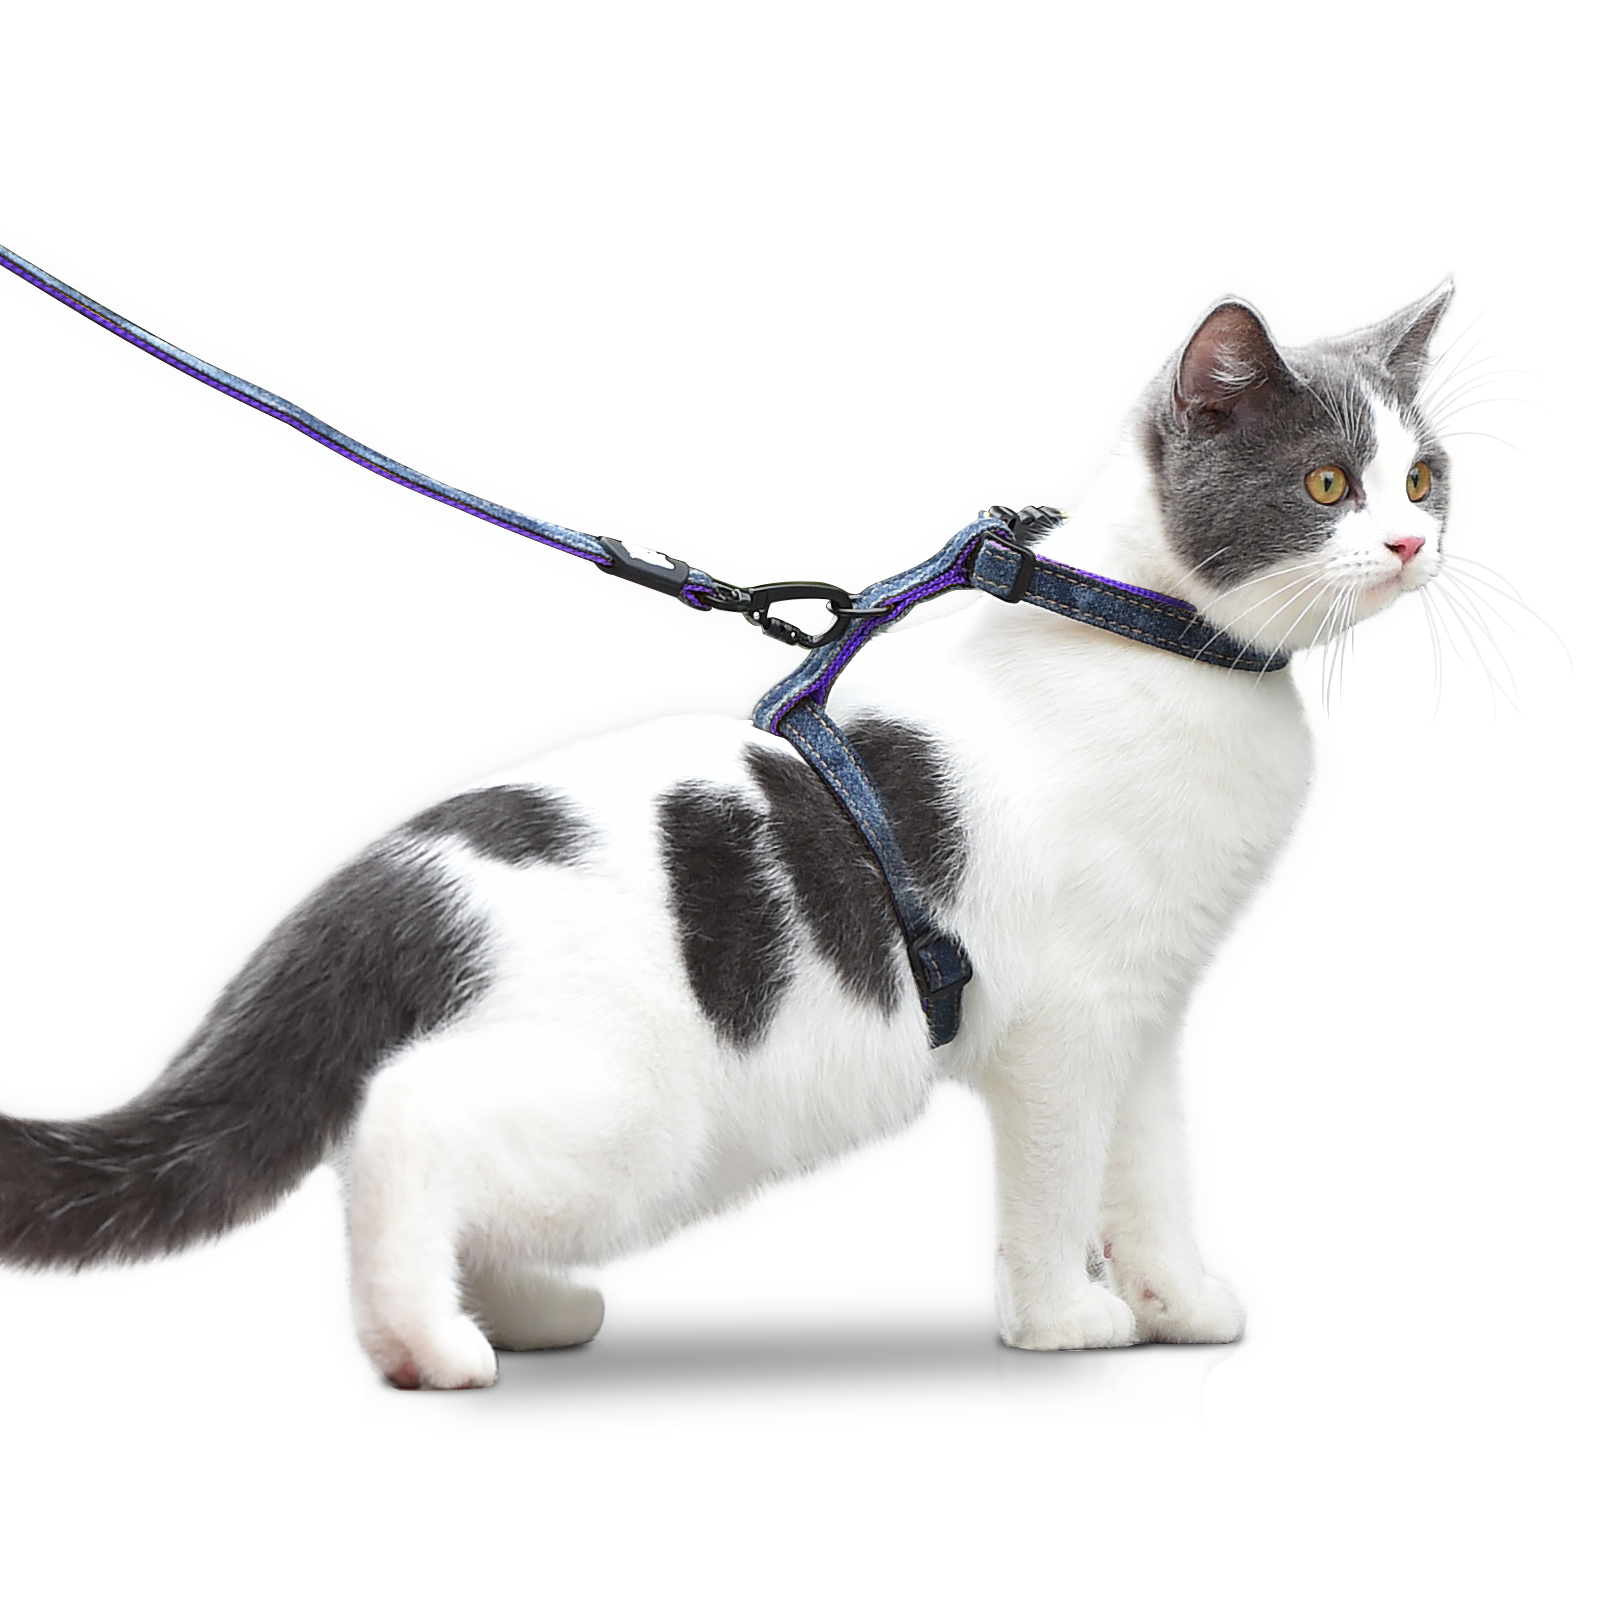 Cat Harness and Leash Set